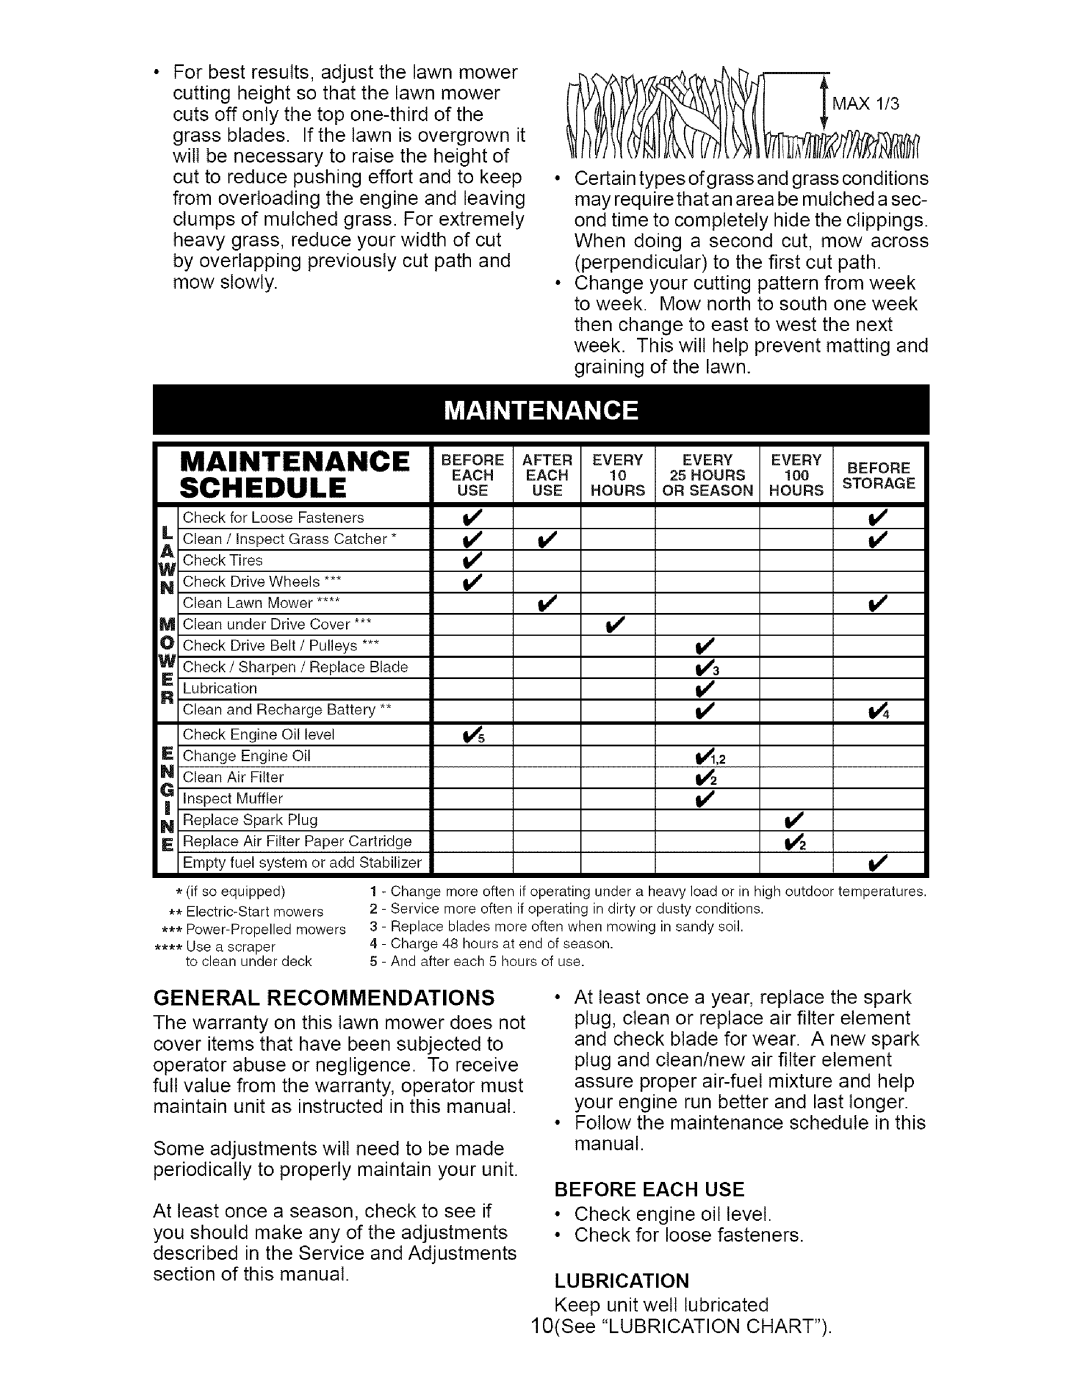 Craftsman 917.37134 owner manual Maintenance, Schedule, Use Hoursorseaso.Hoursstorage, General Recommendations 